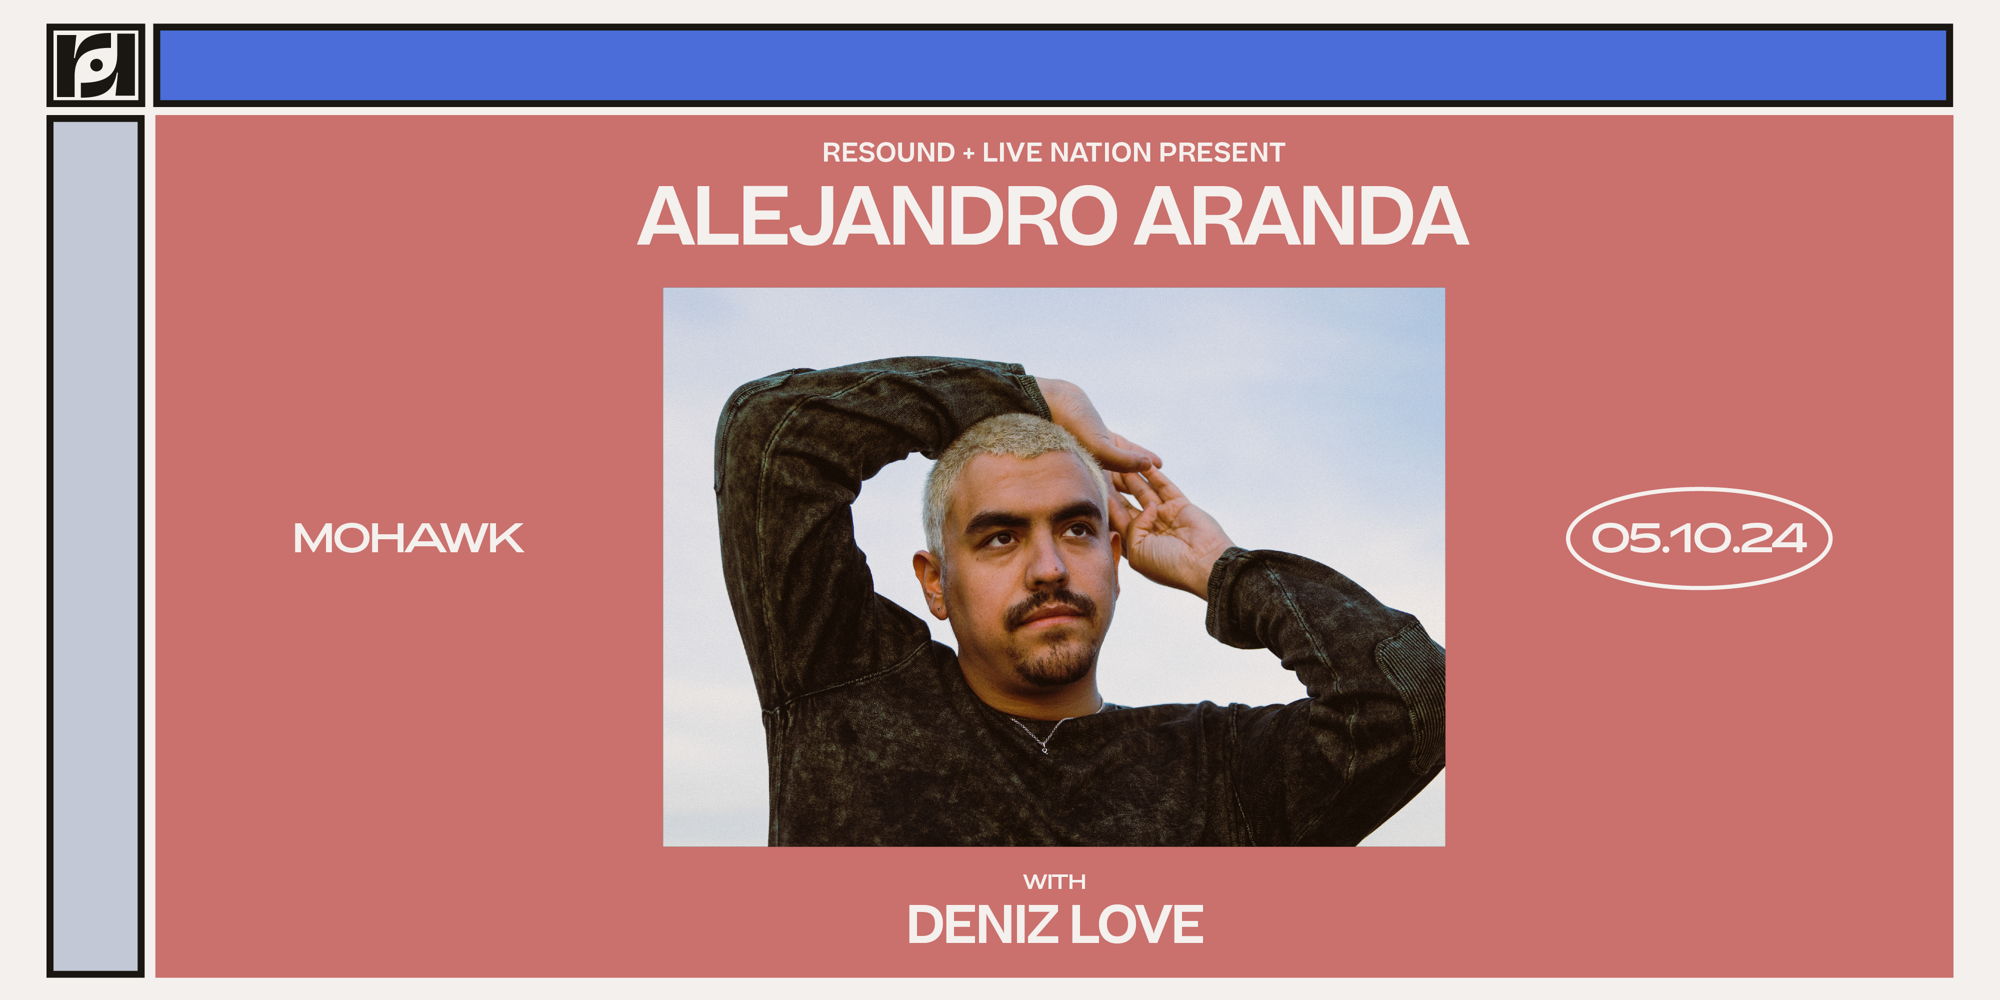 Live Nation + Resound Present: Alejandro Aranda w/ Deniz Love at Mohawk promotional image